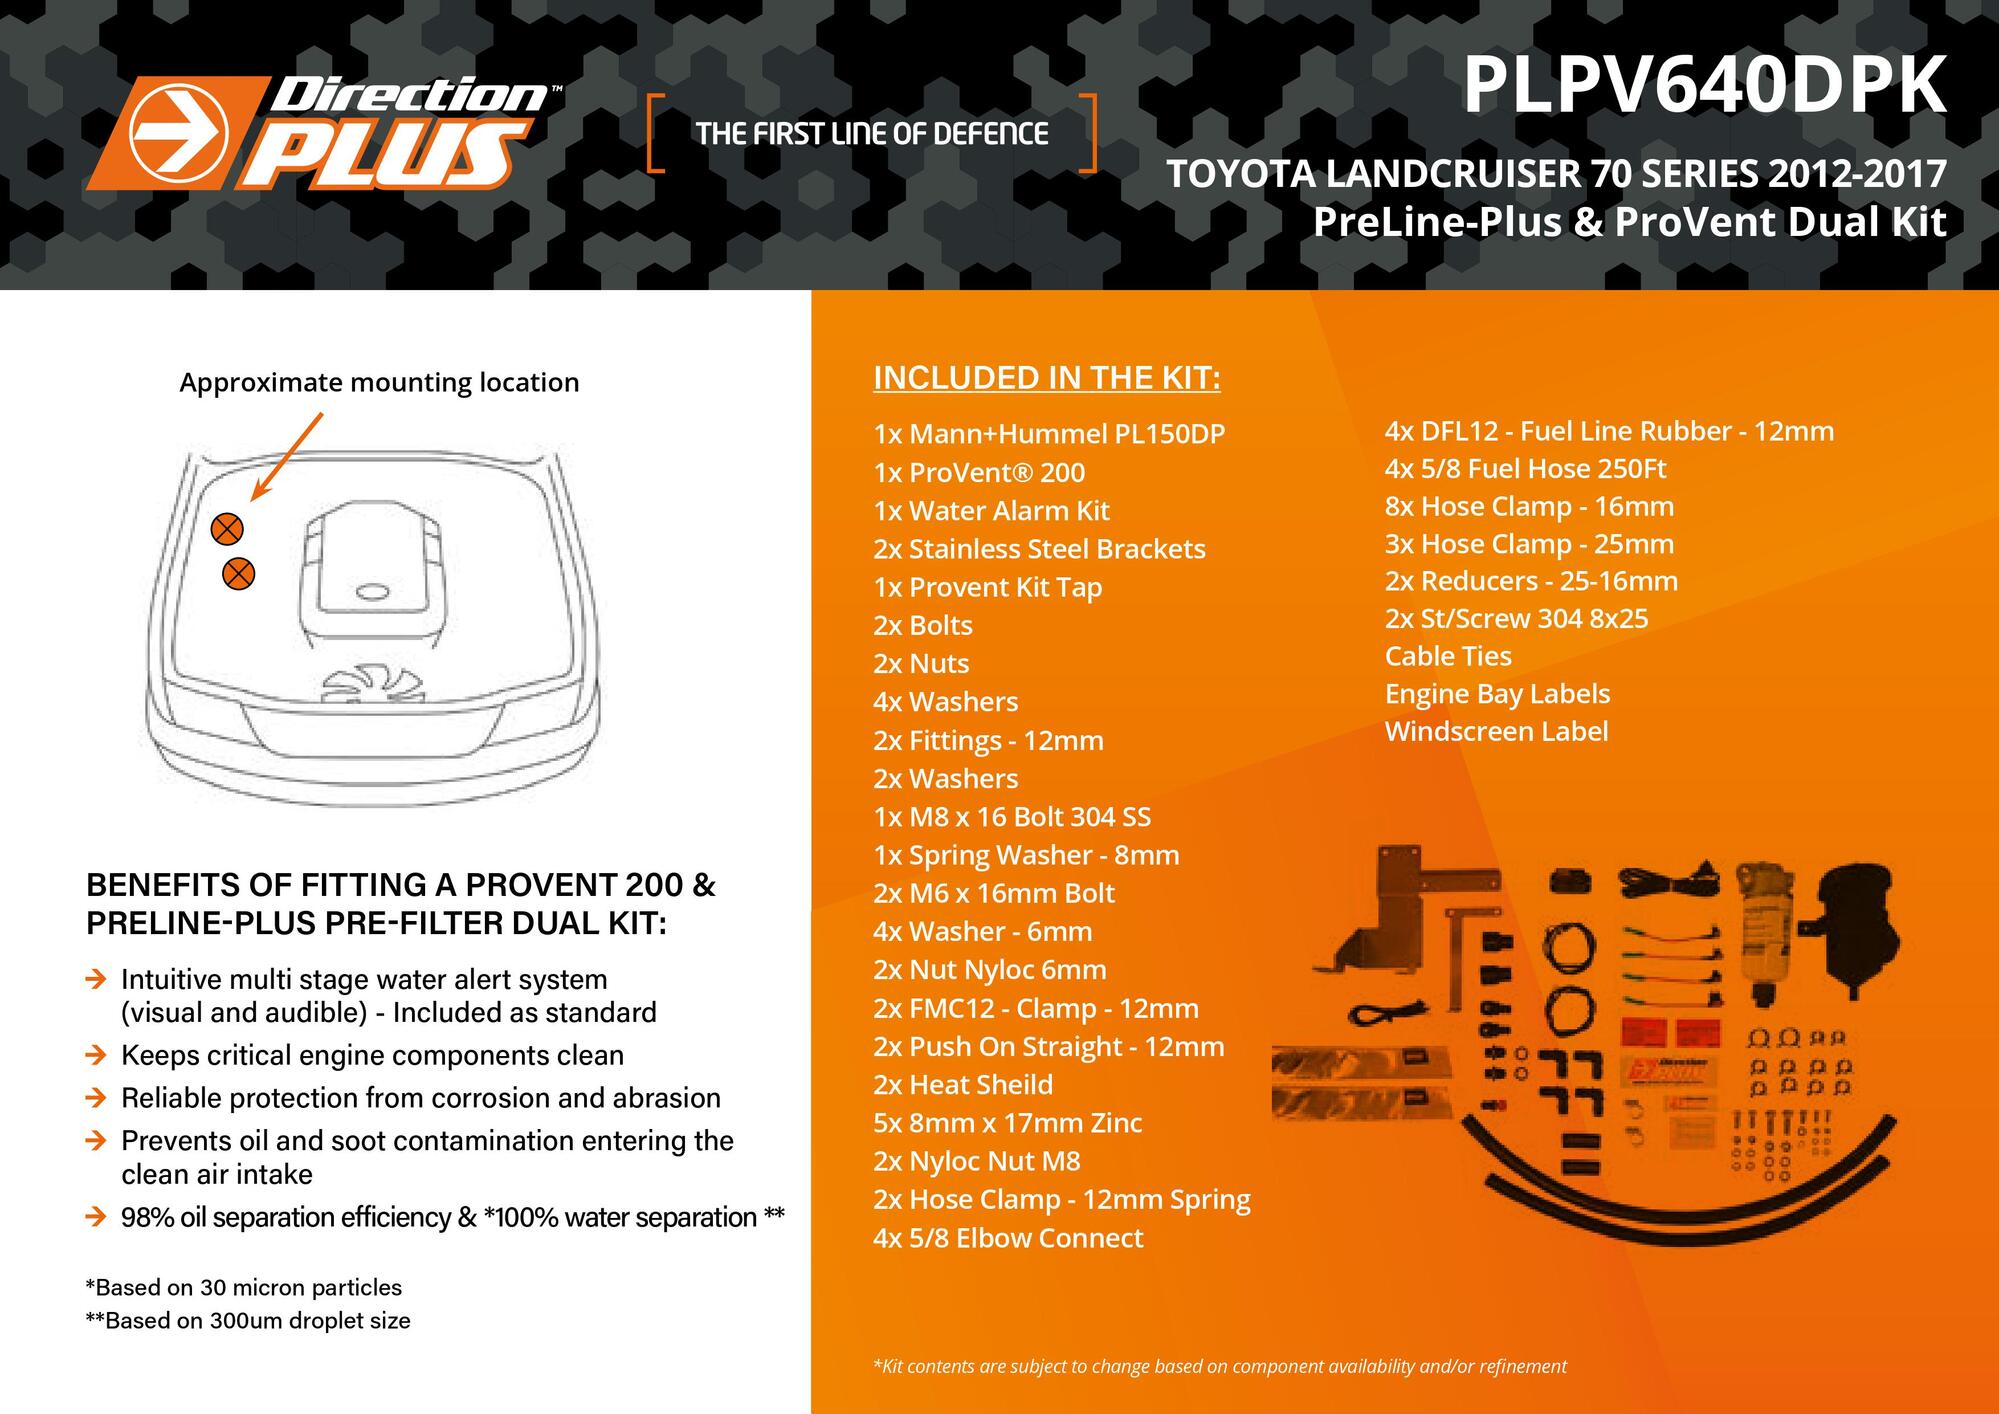 PreLine-Plus & Provent 200 Dual Kit For Toyota Landcruiser 70 Series 2012 - 2017